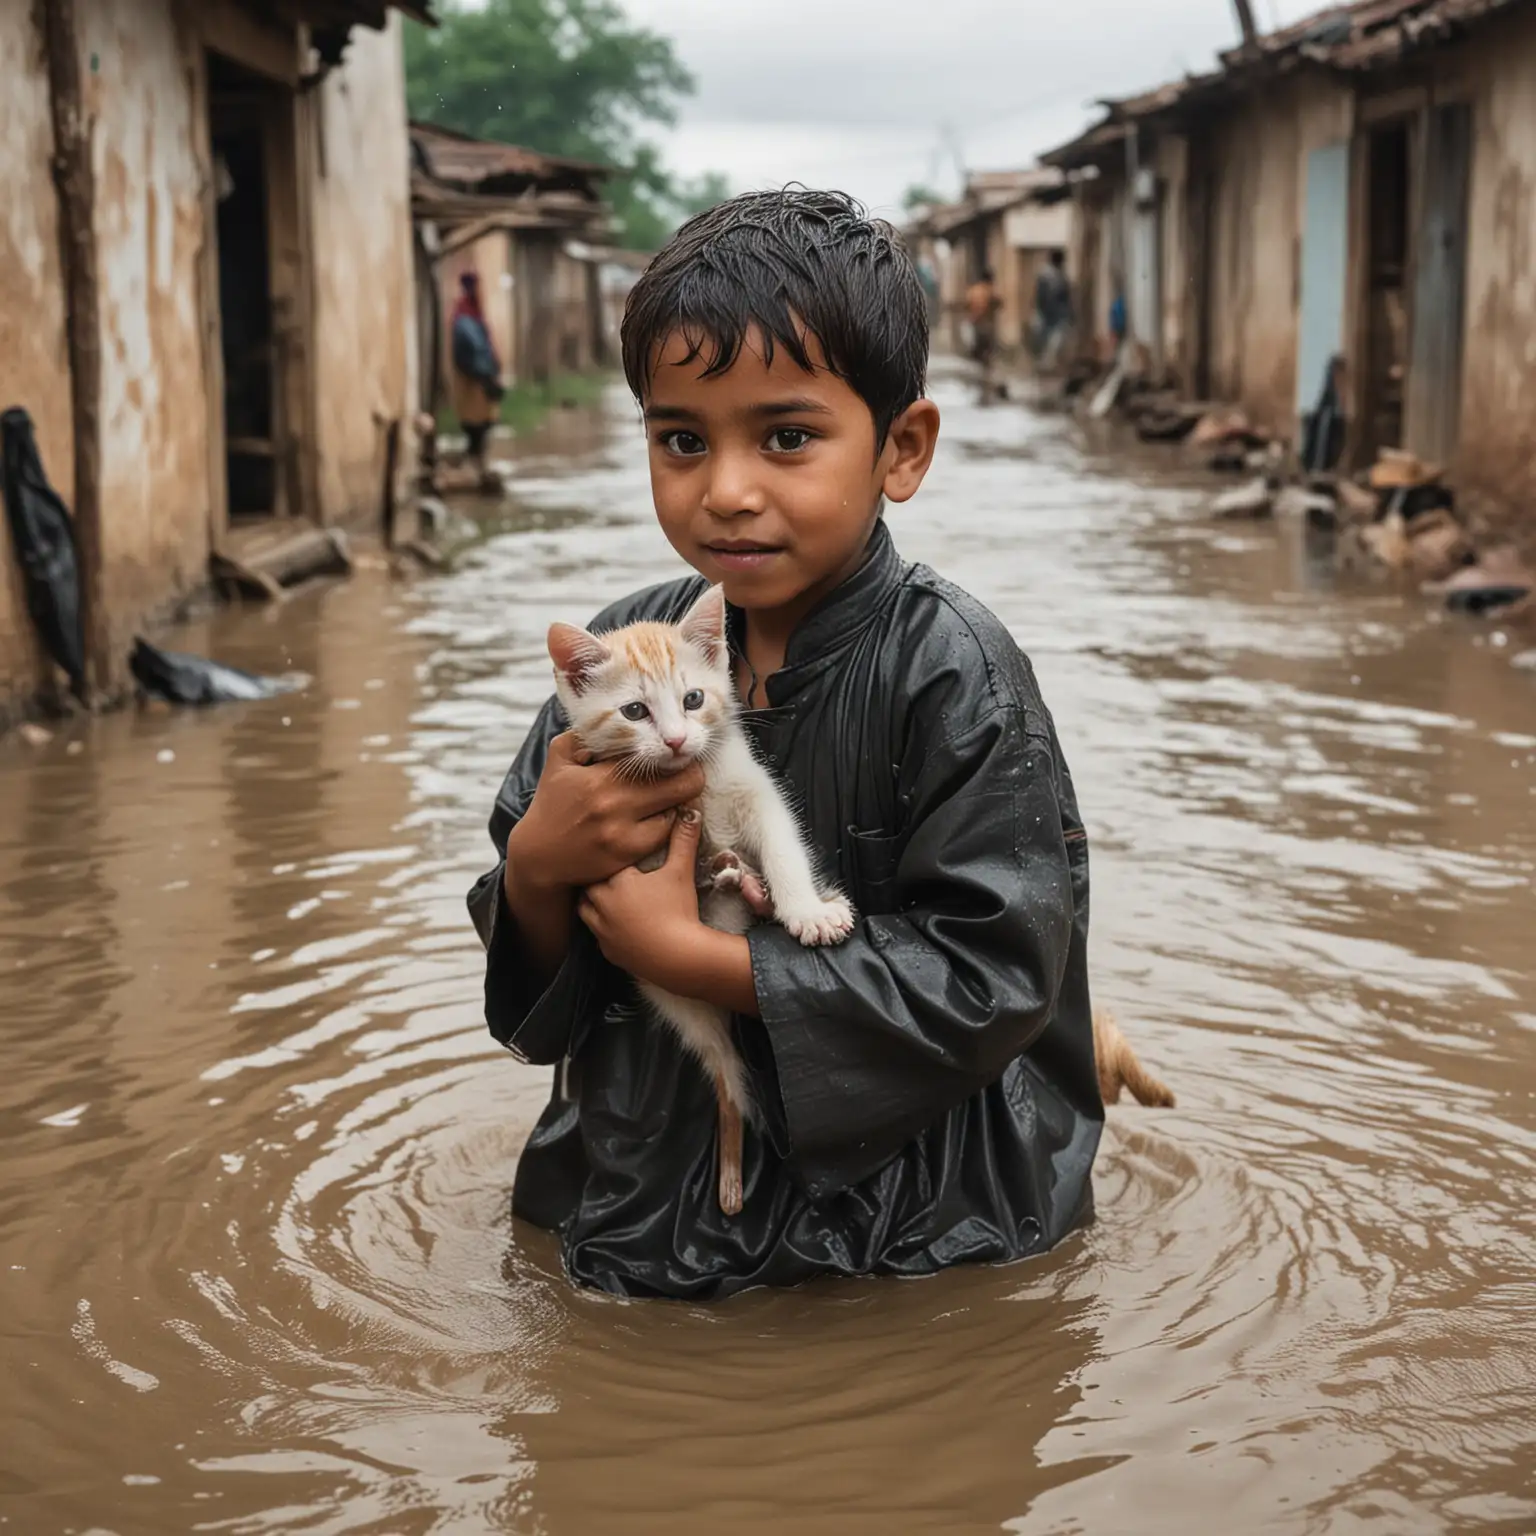 Brave Muslim Orphan Rescuing Kitten from Floodwaters in WarTorn Village